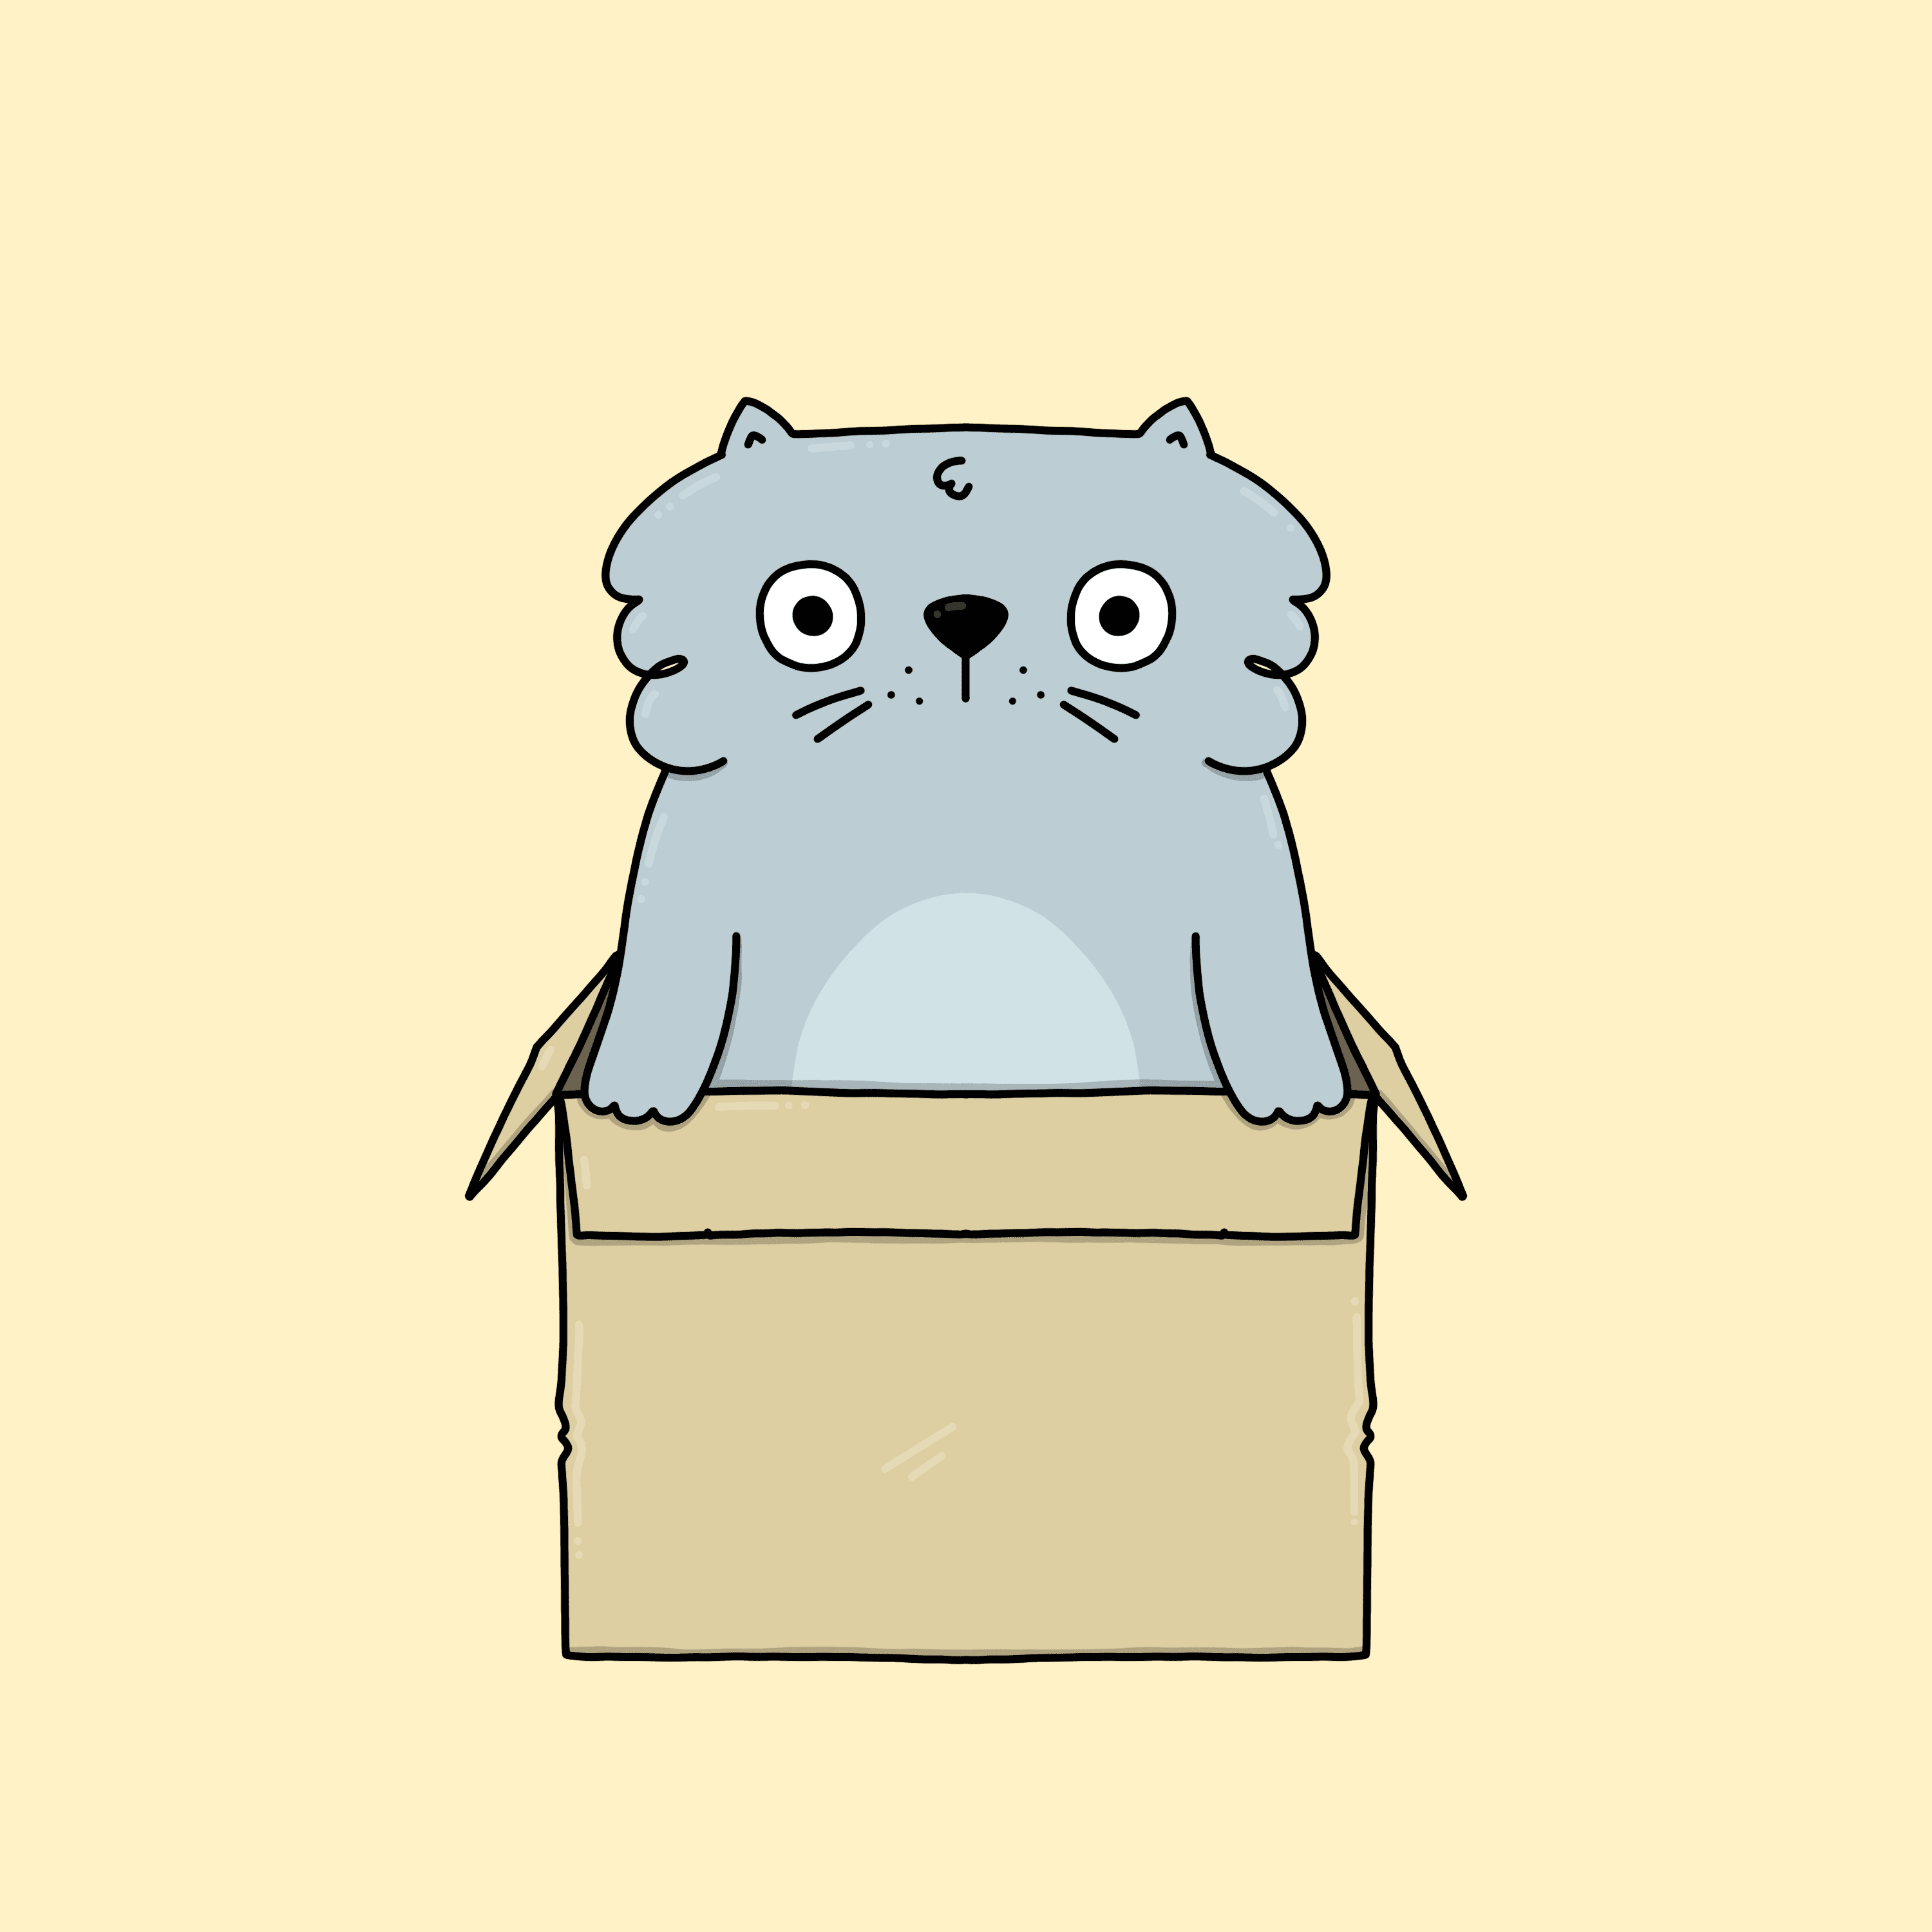 Mish-mish in a Box (1/24)